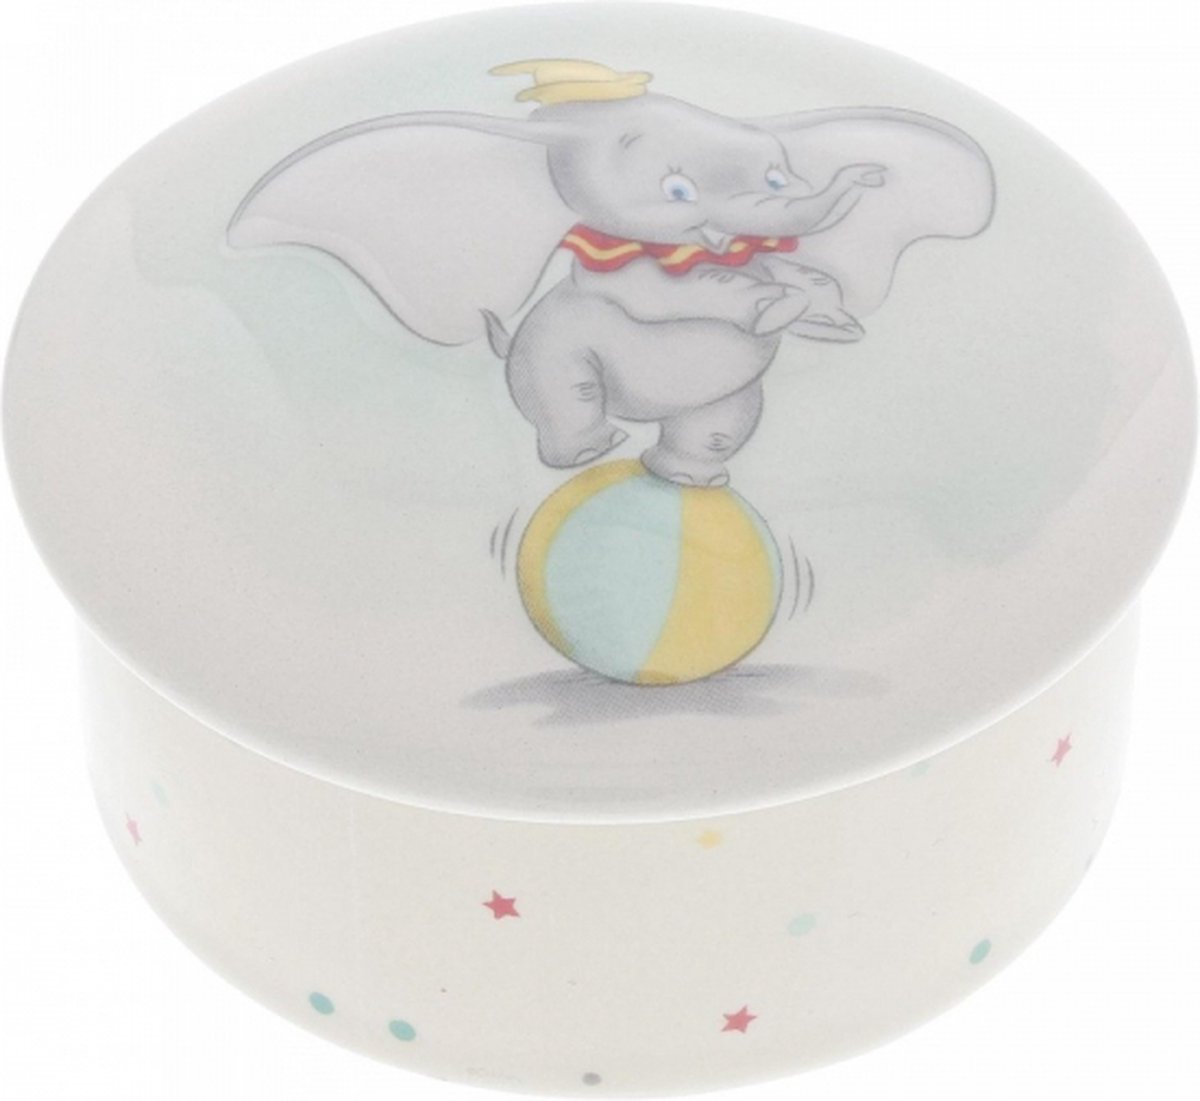 Enchanting Disney - Dumbo Keepsake Box - Porseleinen Dombo bakje - doorsnee 8 cm.